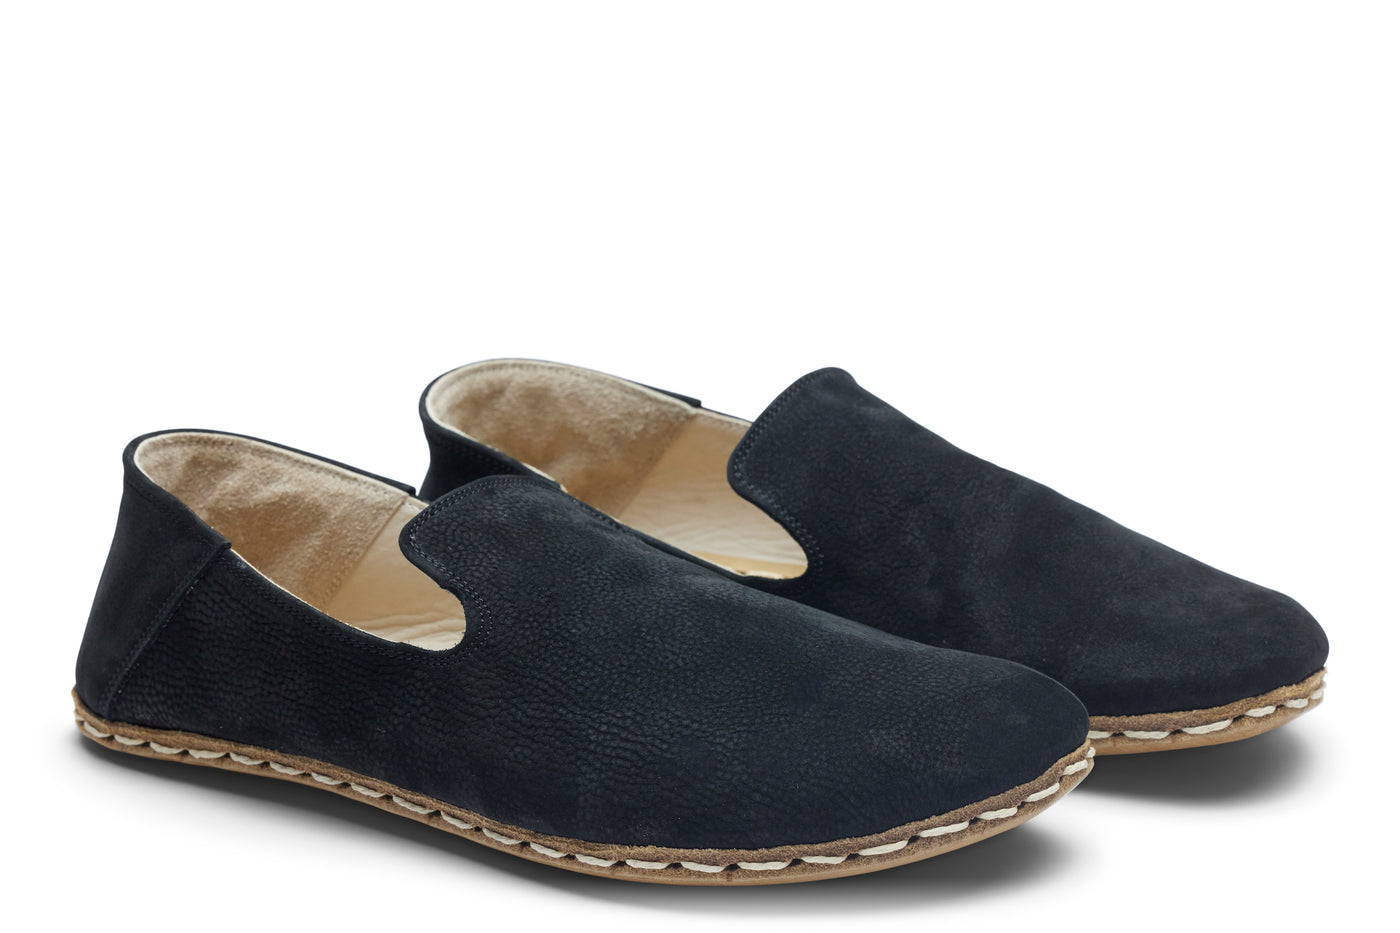 Raum Goods - Barefoot Grounding Shoes